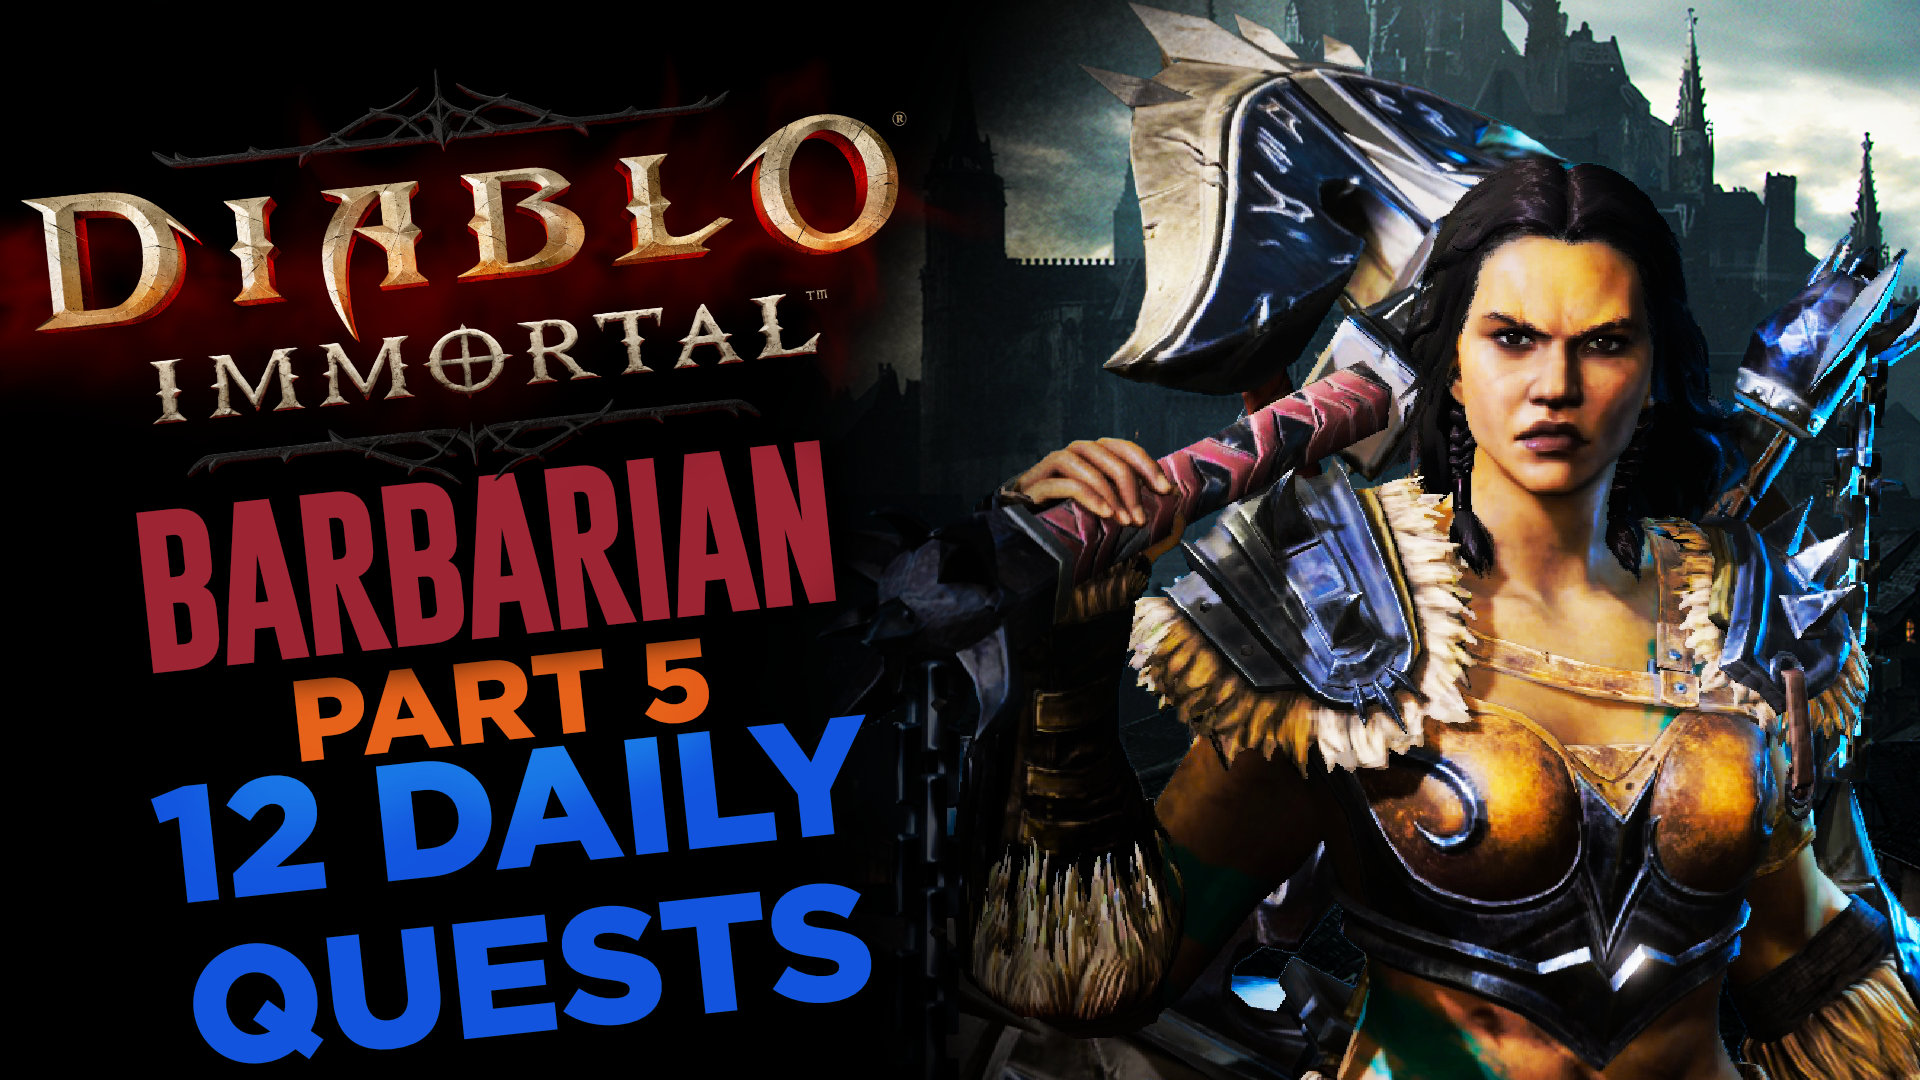 Barbarian Quests Part 5